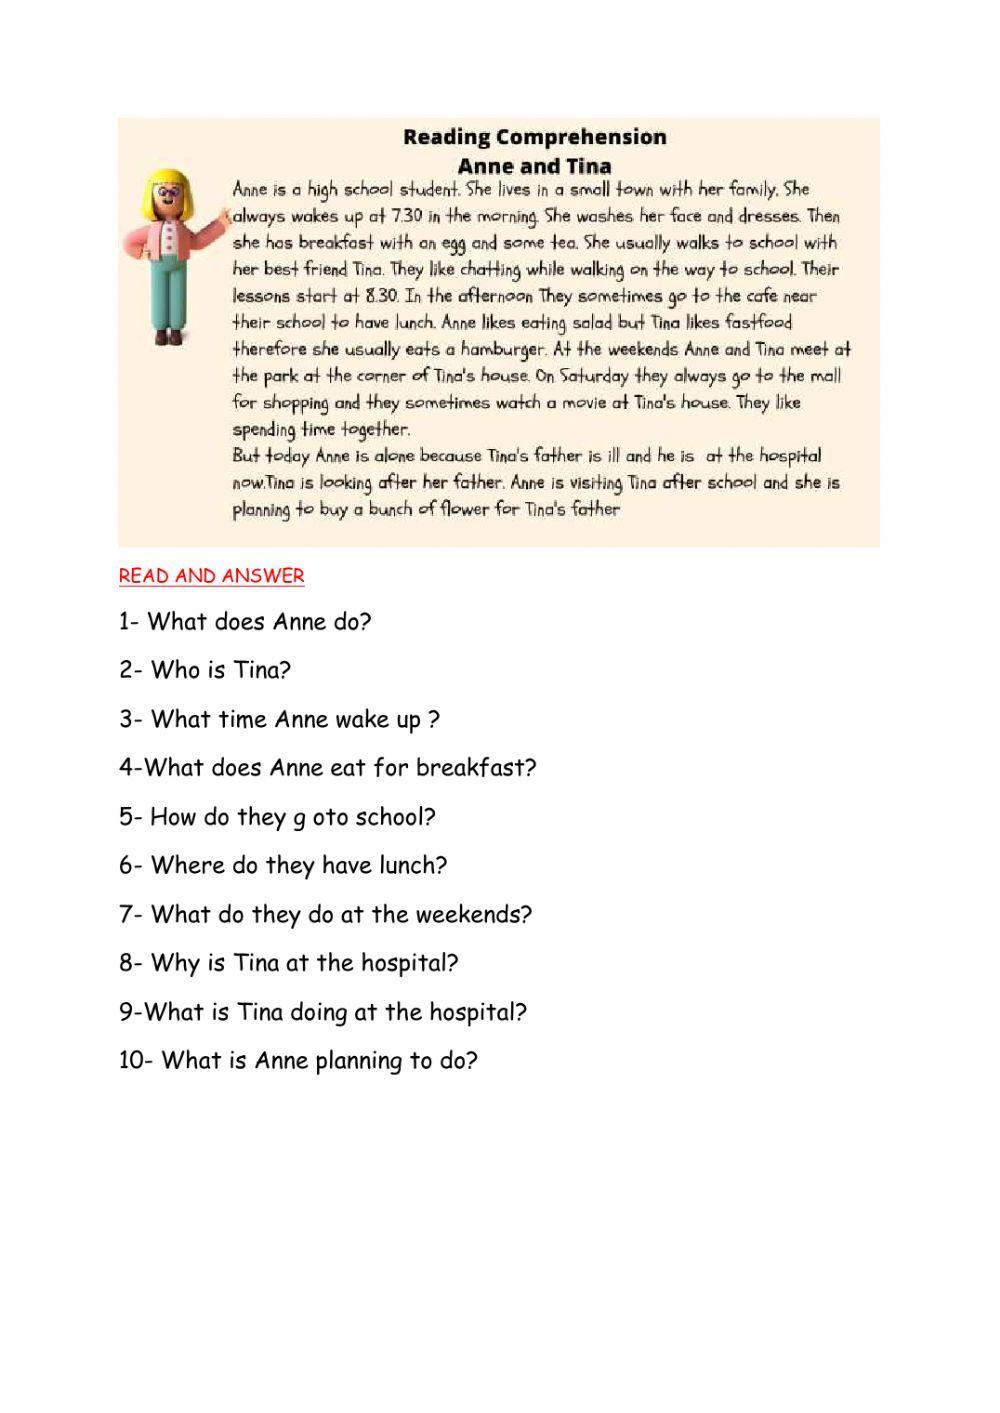 Reading Comprehension online exercise for A2 | Live Worksheets